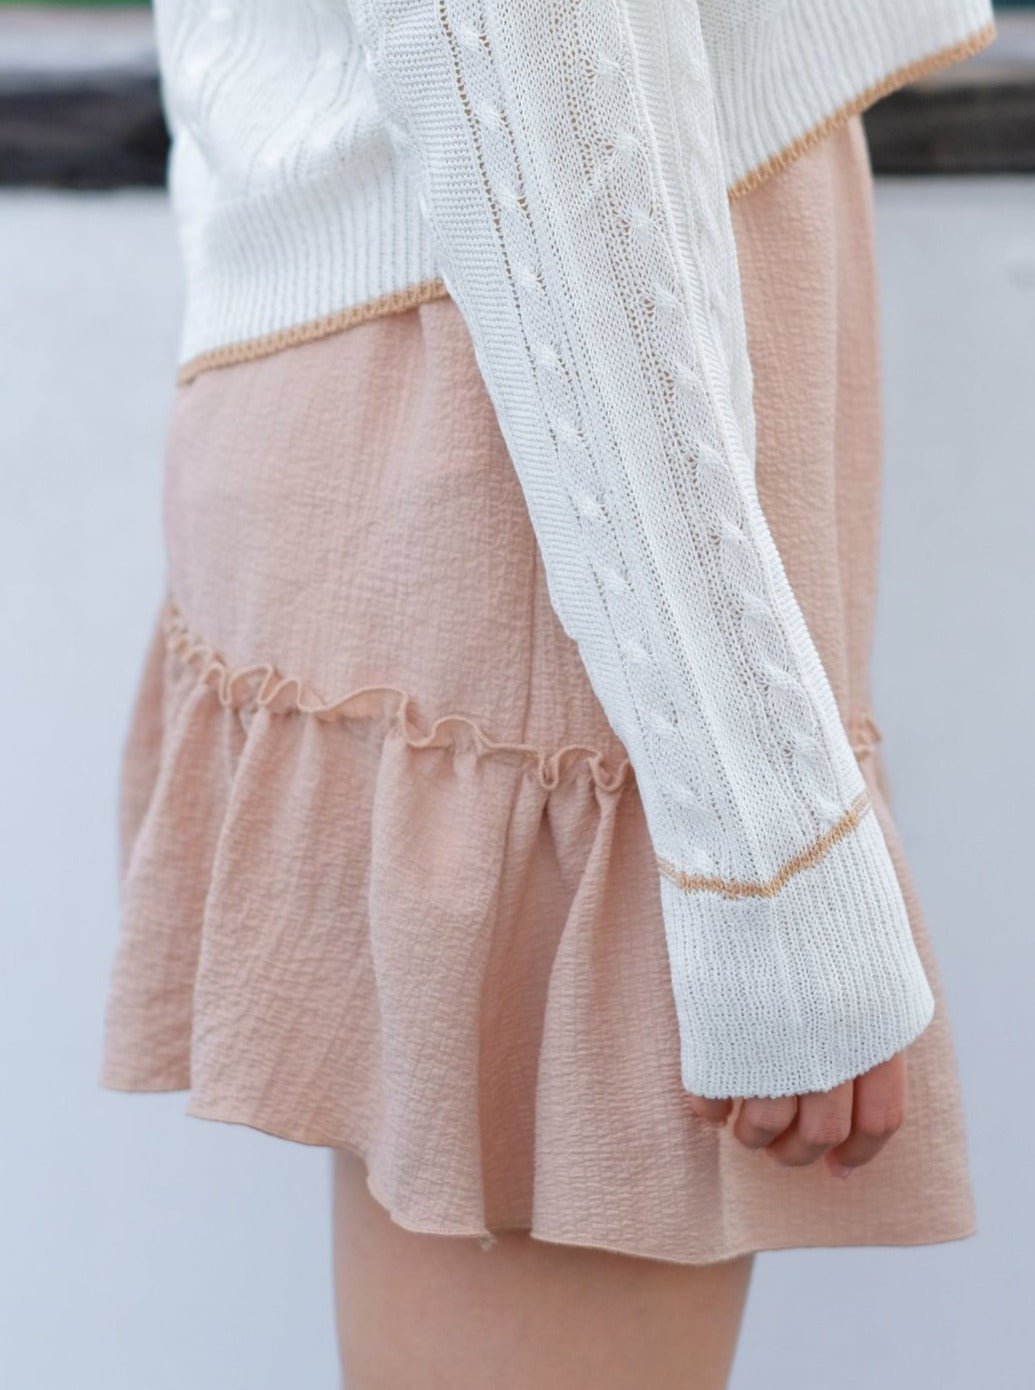 Ruffled Tiered Mini Skirt ALMOND PINK - DAG-DD8666-21AlmondF - Almond Pink - F - D'ZAGE Designs